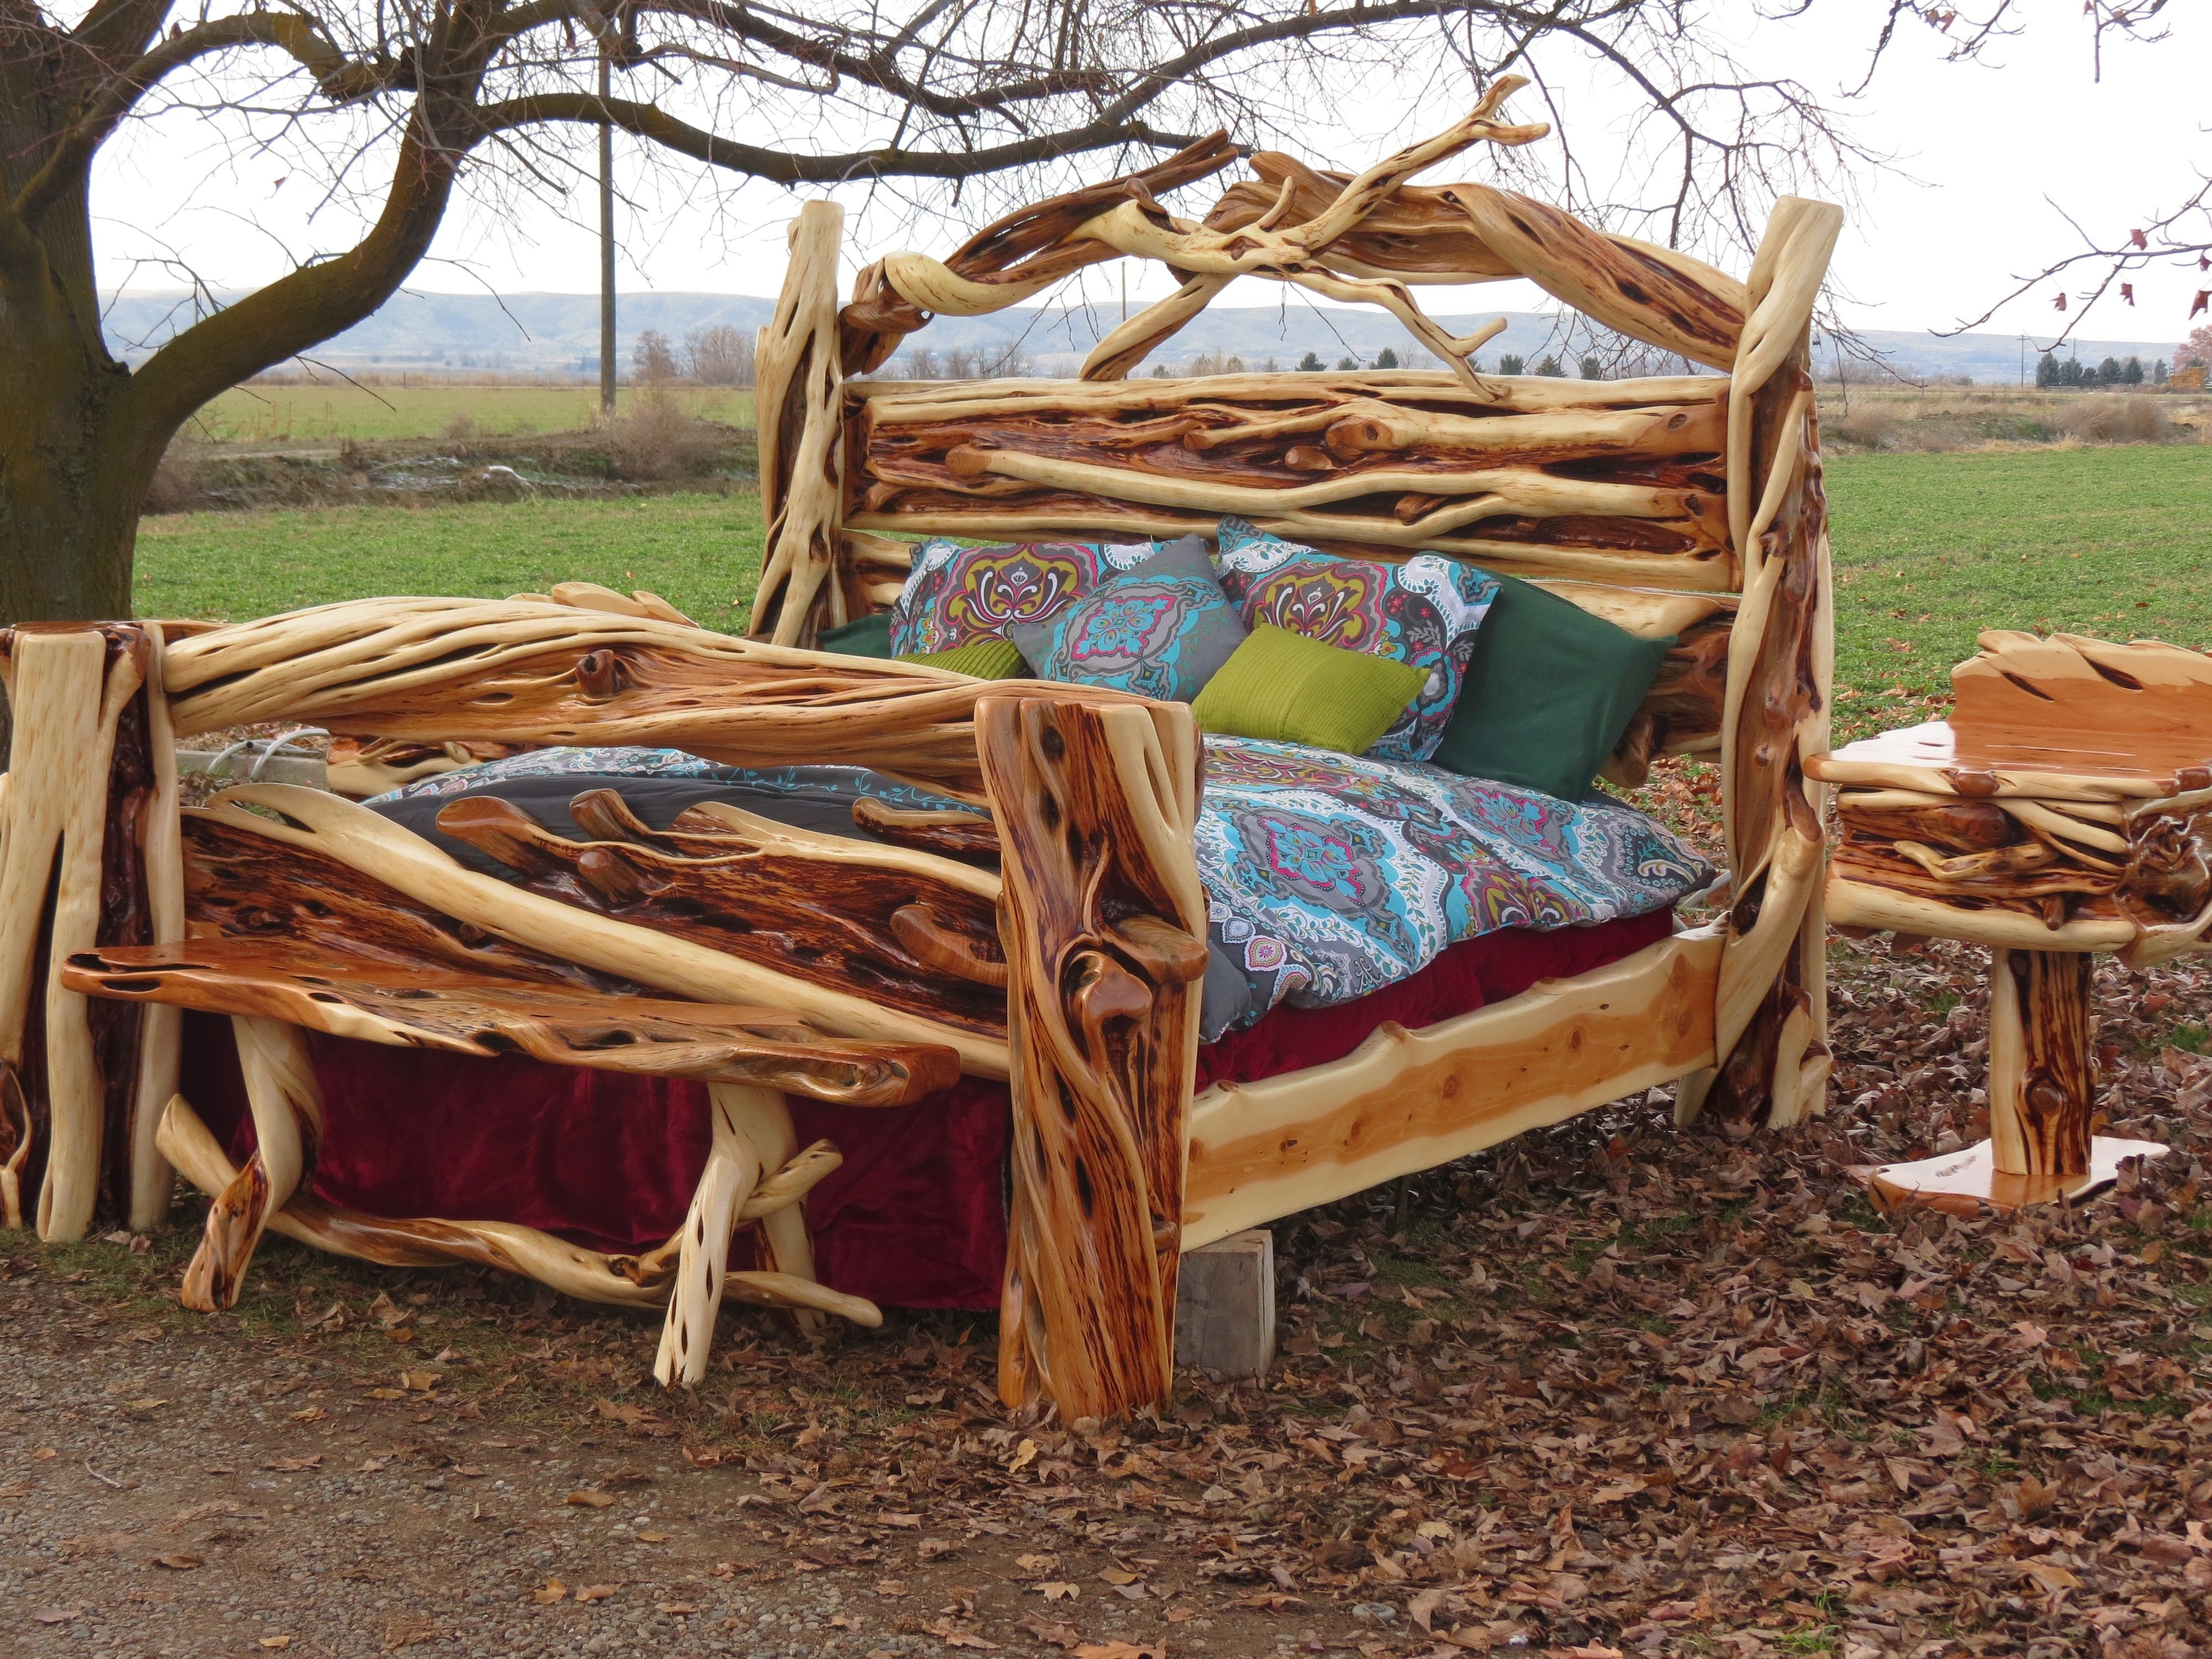 Cedar Log Bedroom Furniture Elegant the Twists and Curves Of This Gorgeous King Slab Juniper Log